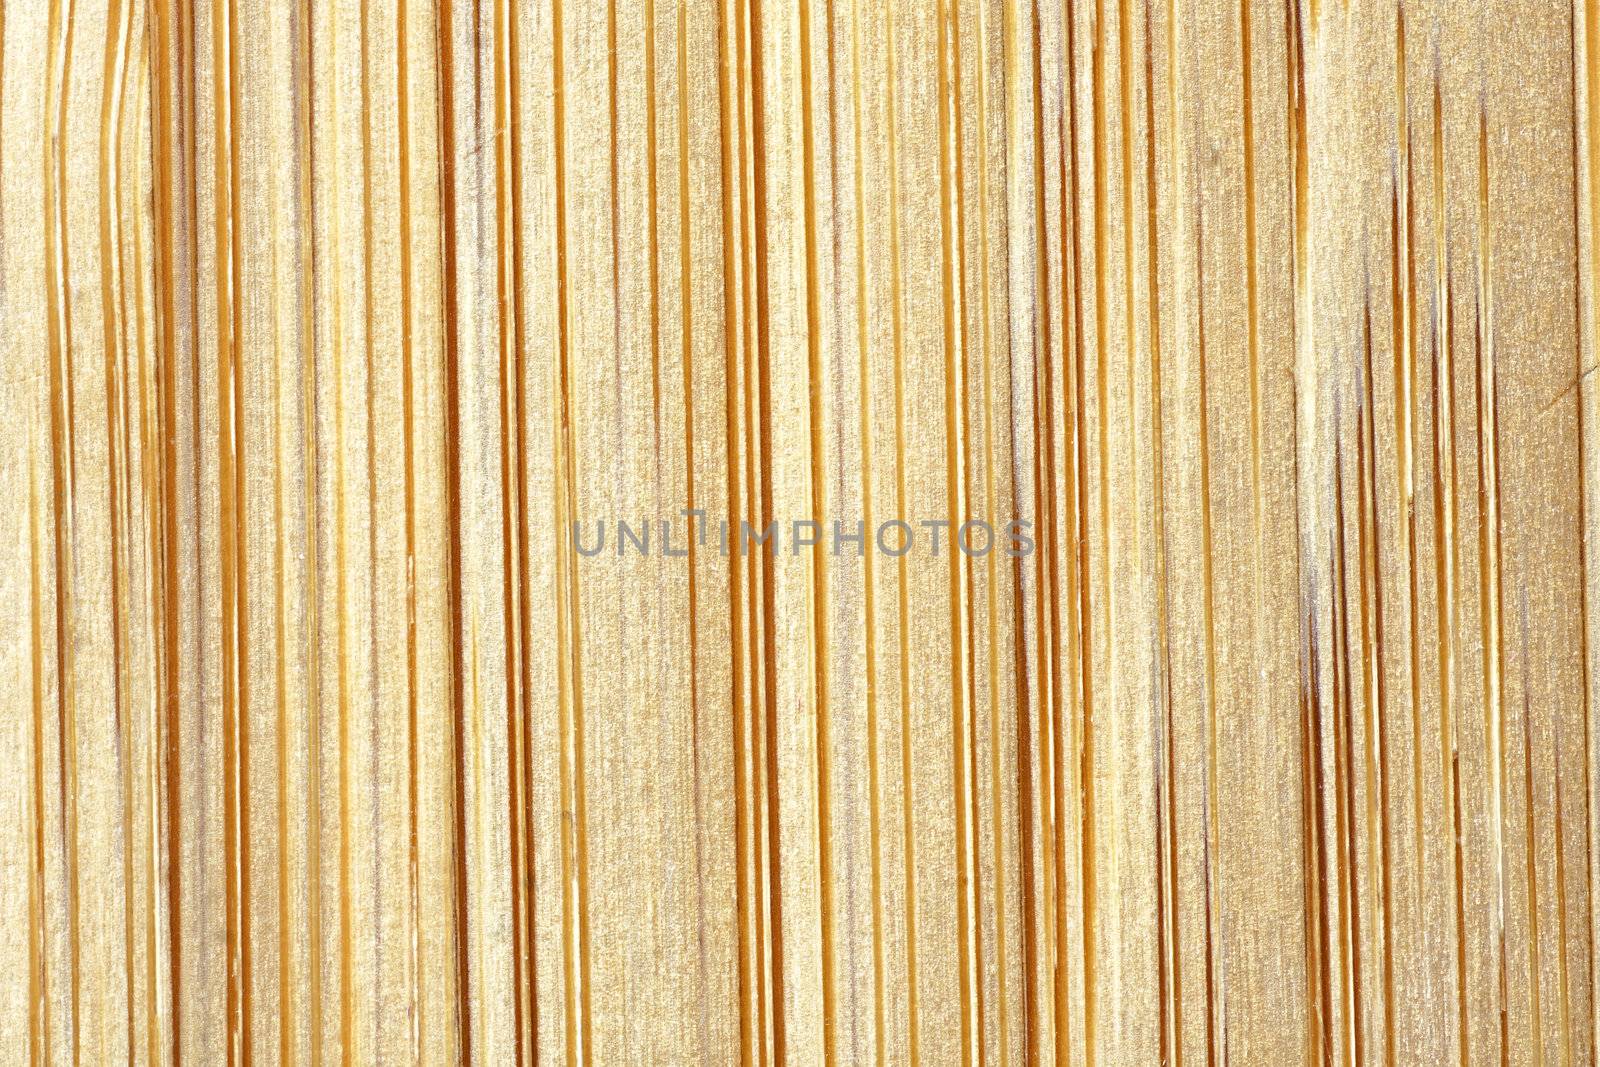 Bamboo macro by Mirage3